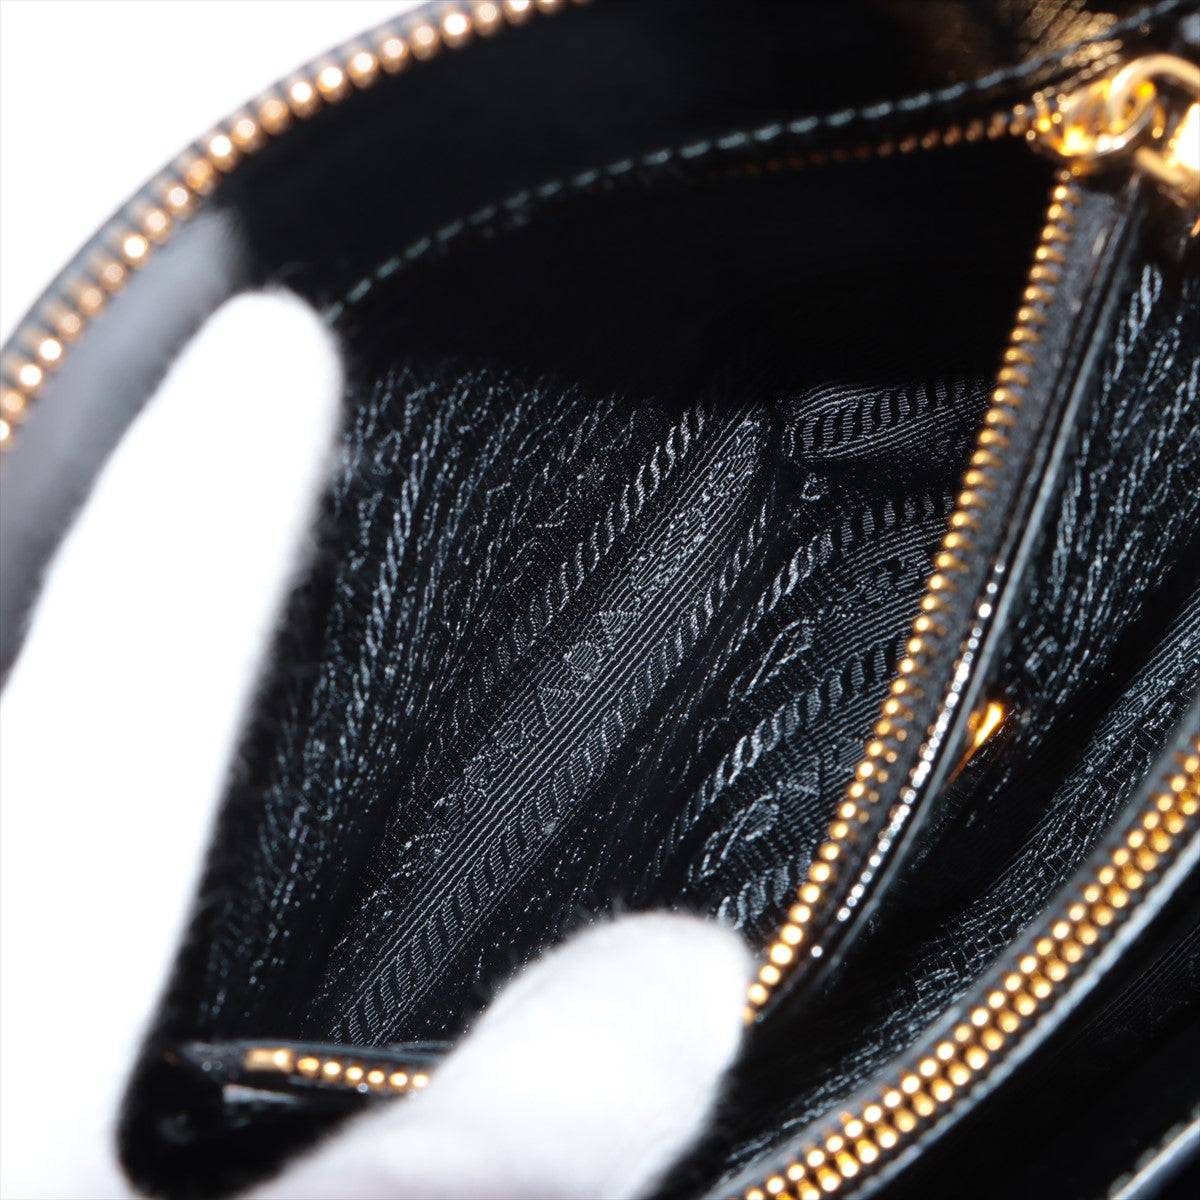 Prada Sapphire Vernik 2WAY Handbag Black